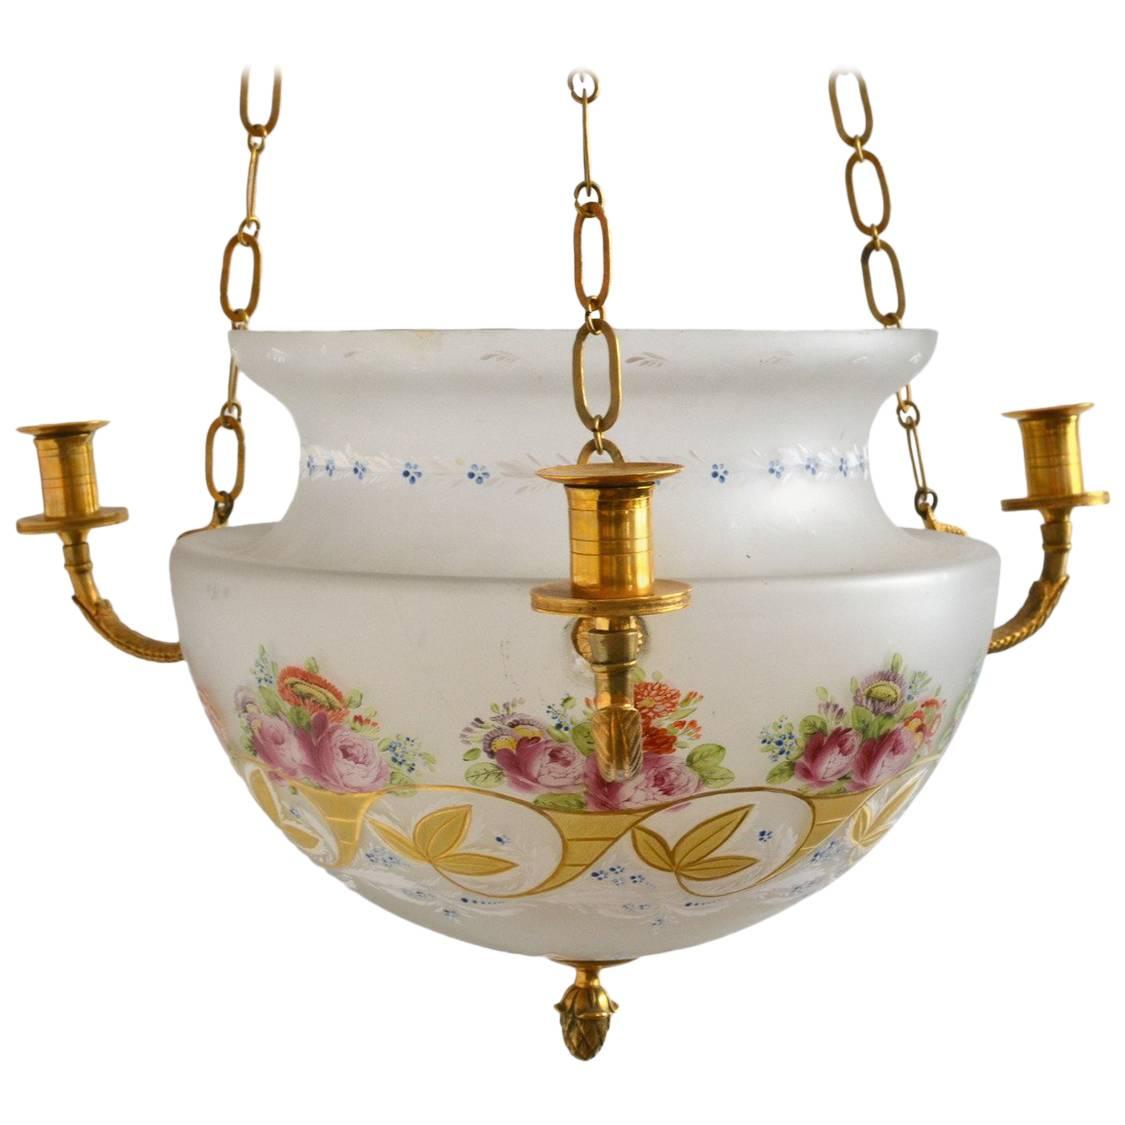 Swedish Painted Glass Empire Hanging Lantern/Lamp, Early 19th Century